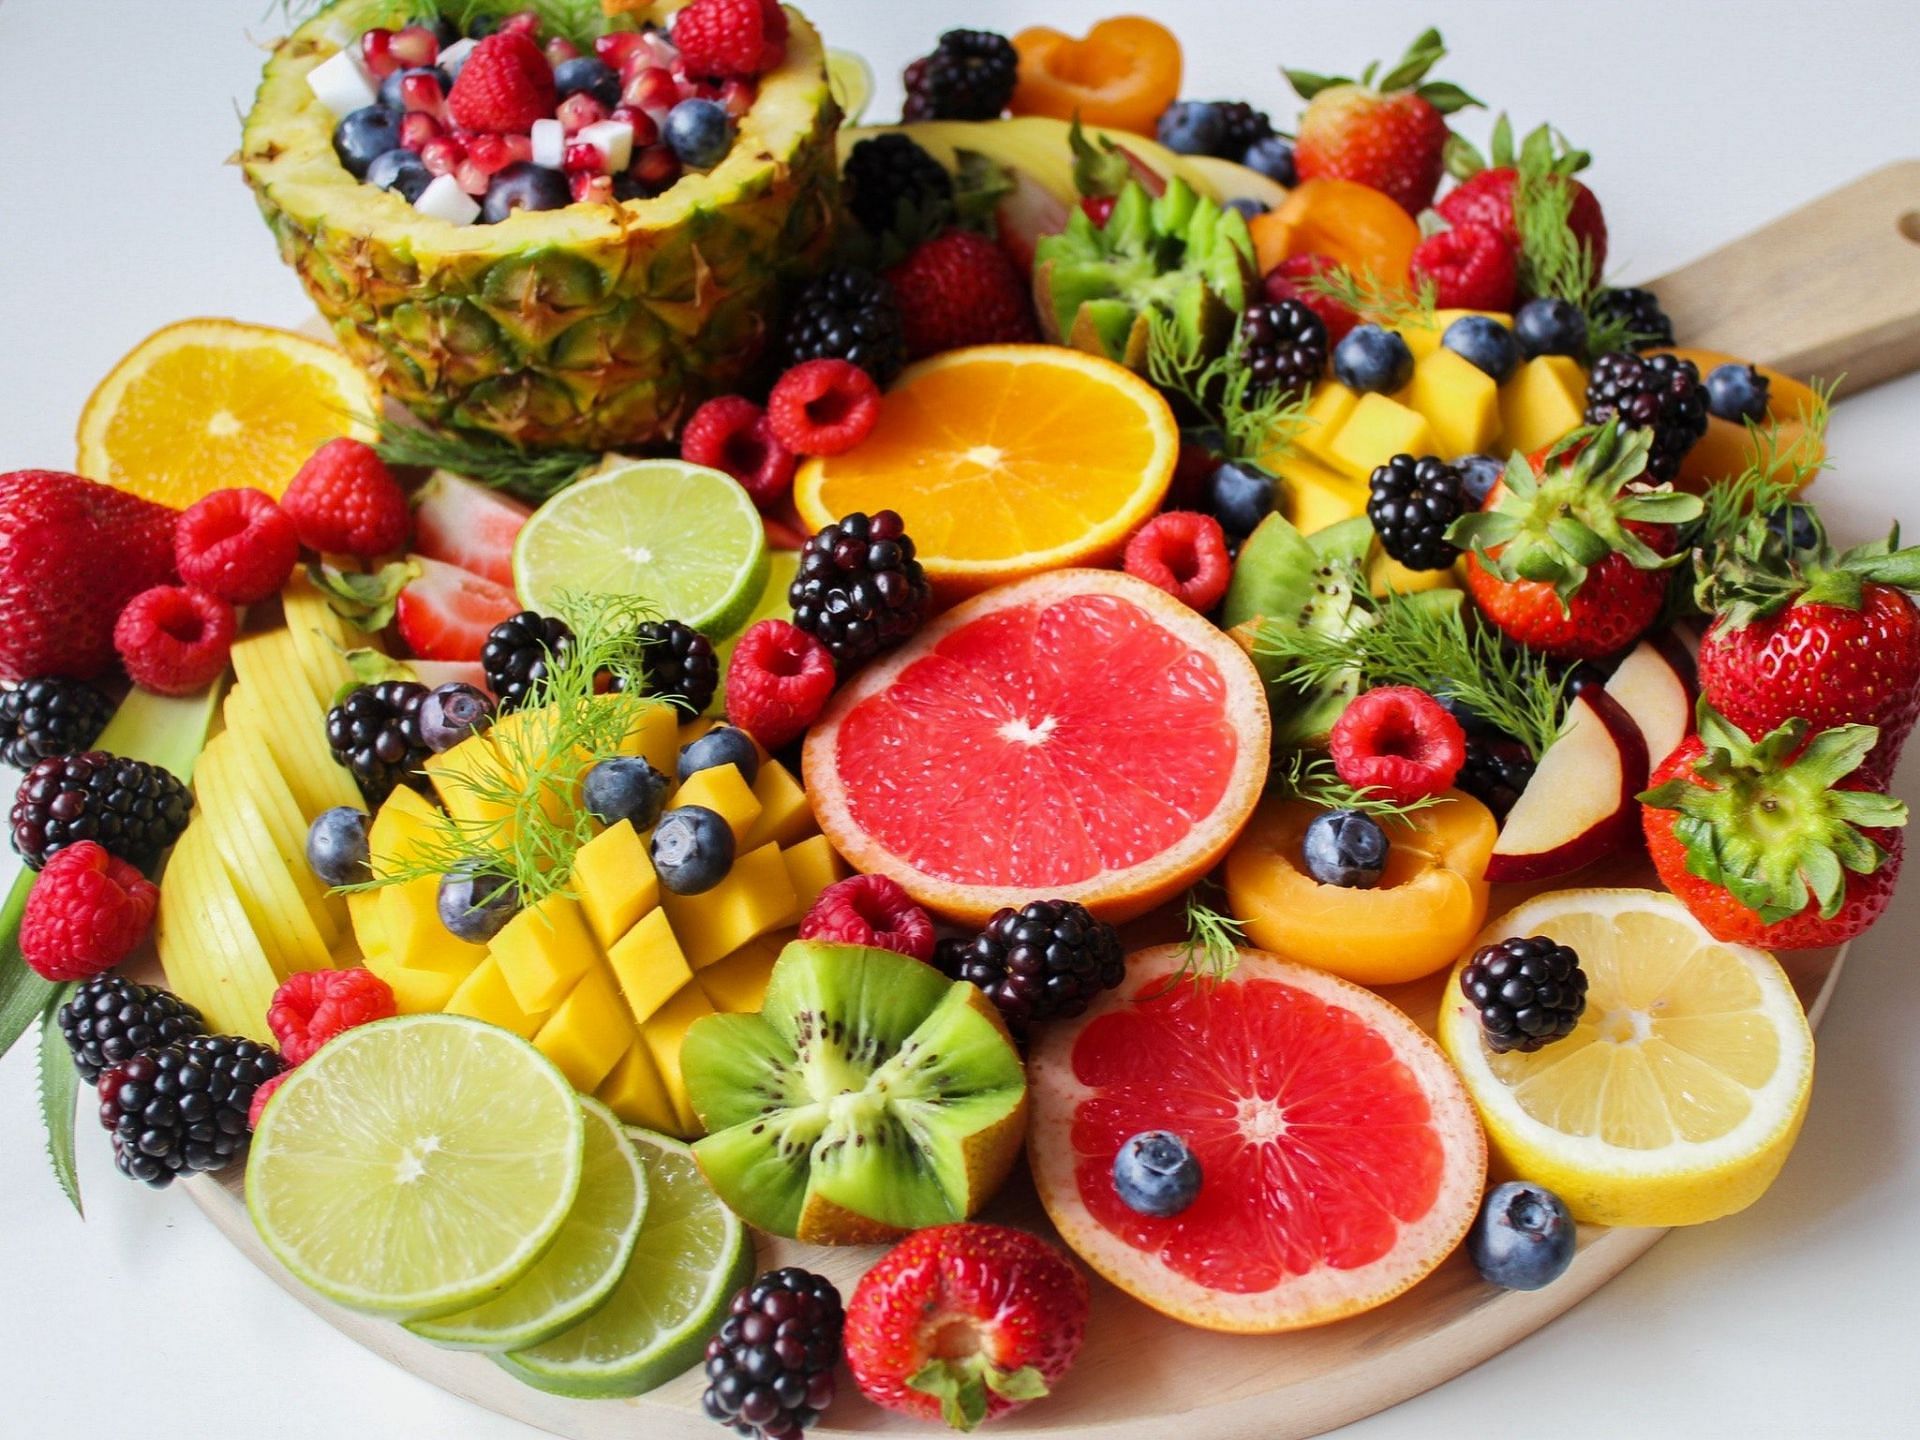 Consuming more acidic fruits can cause dental erosion. (Image via Pexels / Jane Doan)